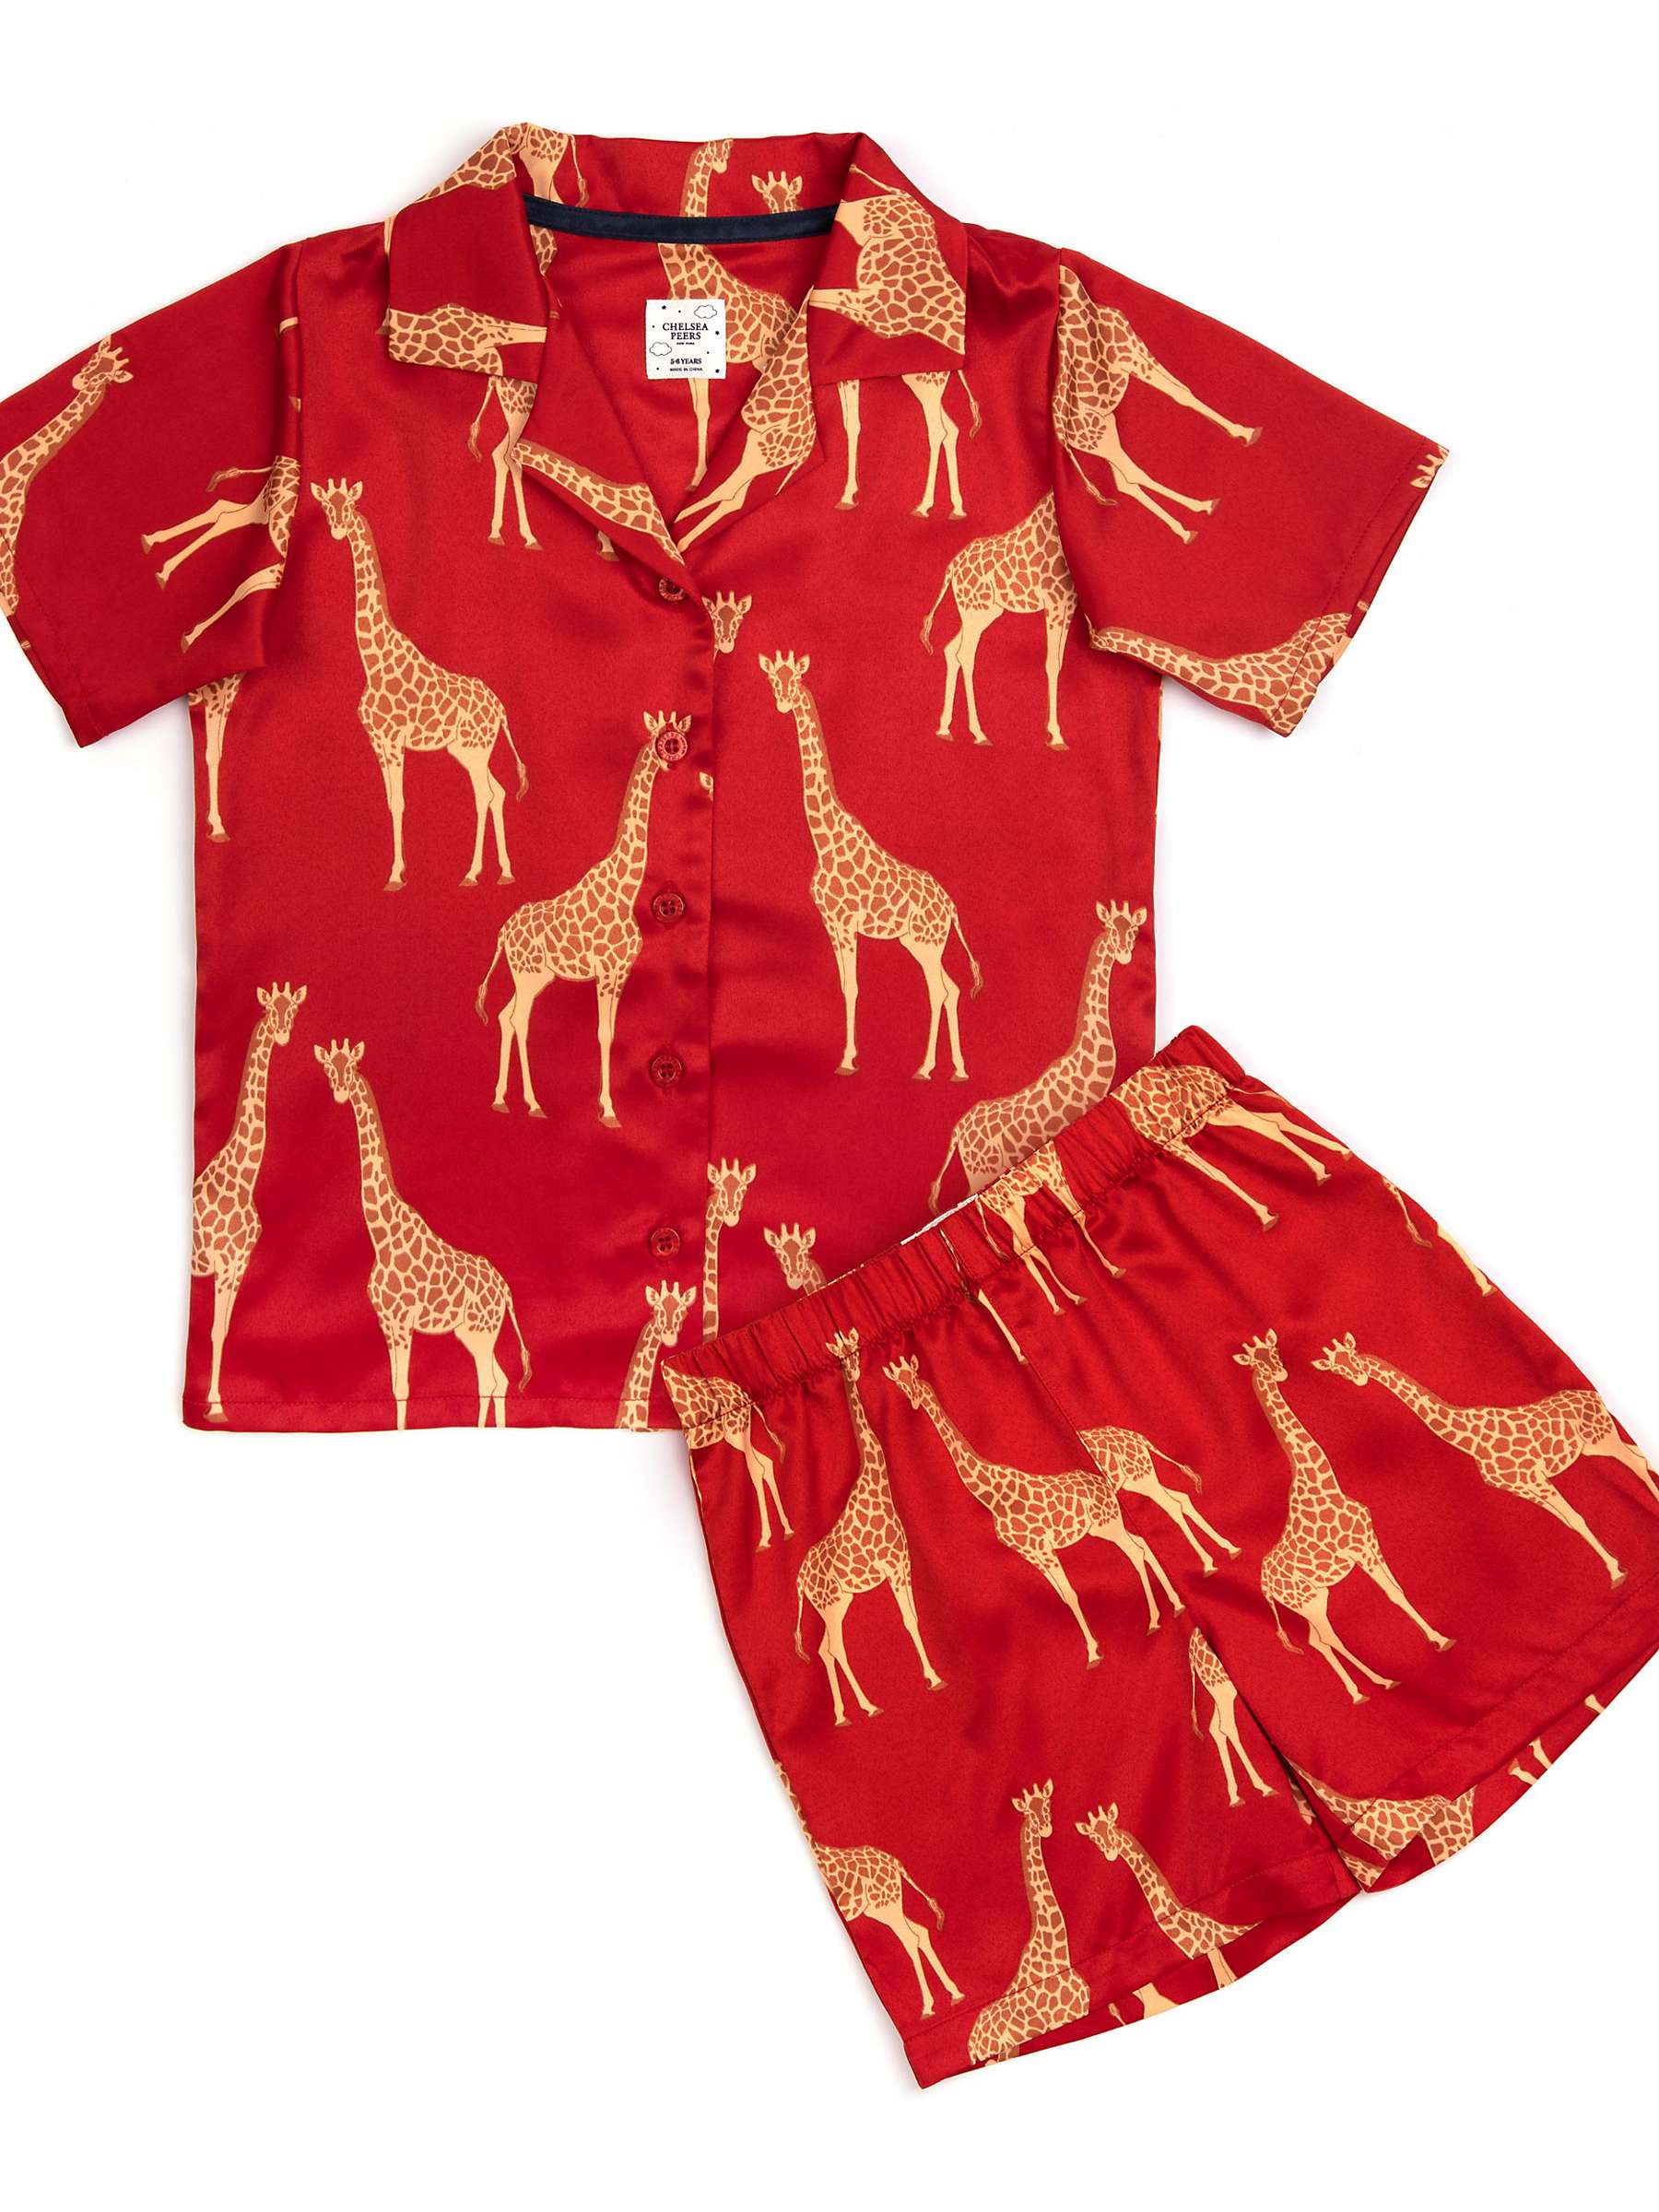 Buy Chelsea Peers Kids' Giraffe Print Satin Pyjama Set, Red/Multi Online at johnlewis.com